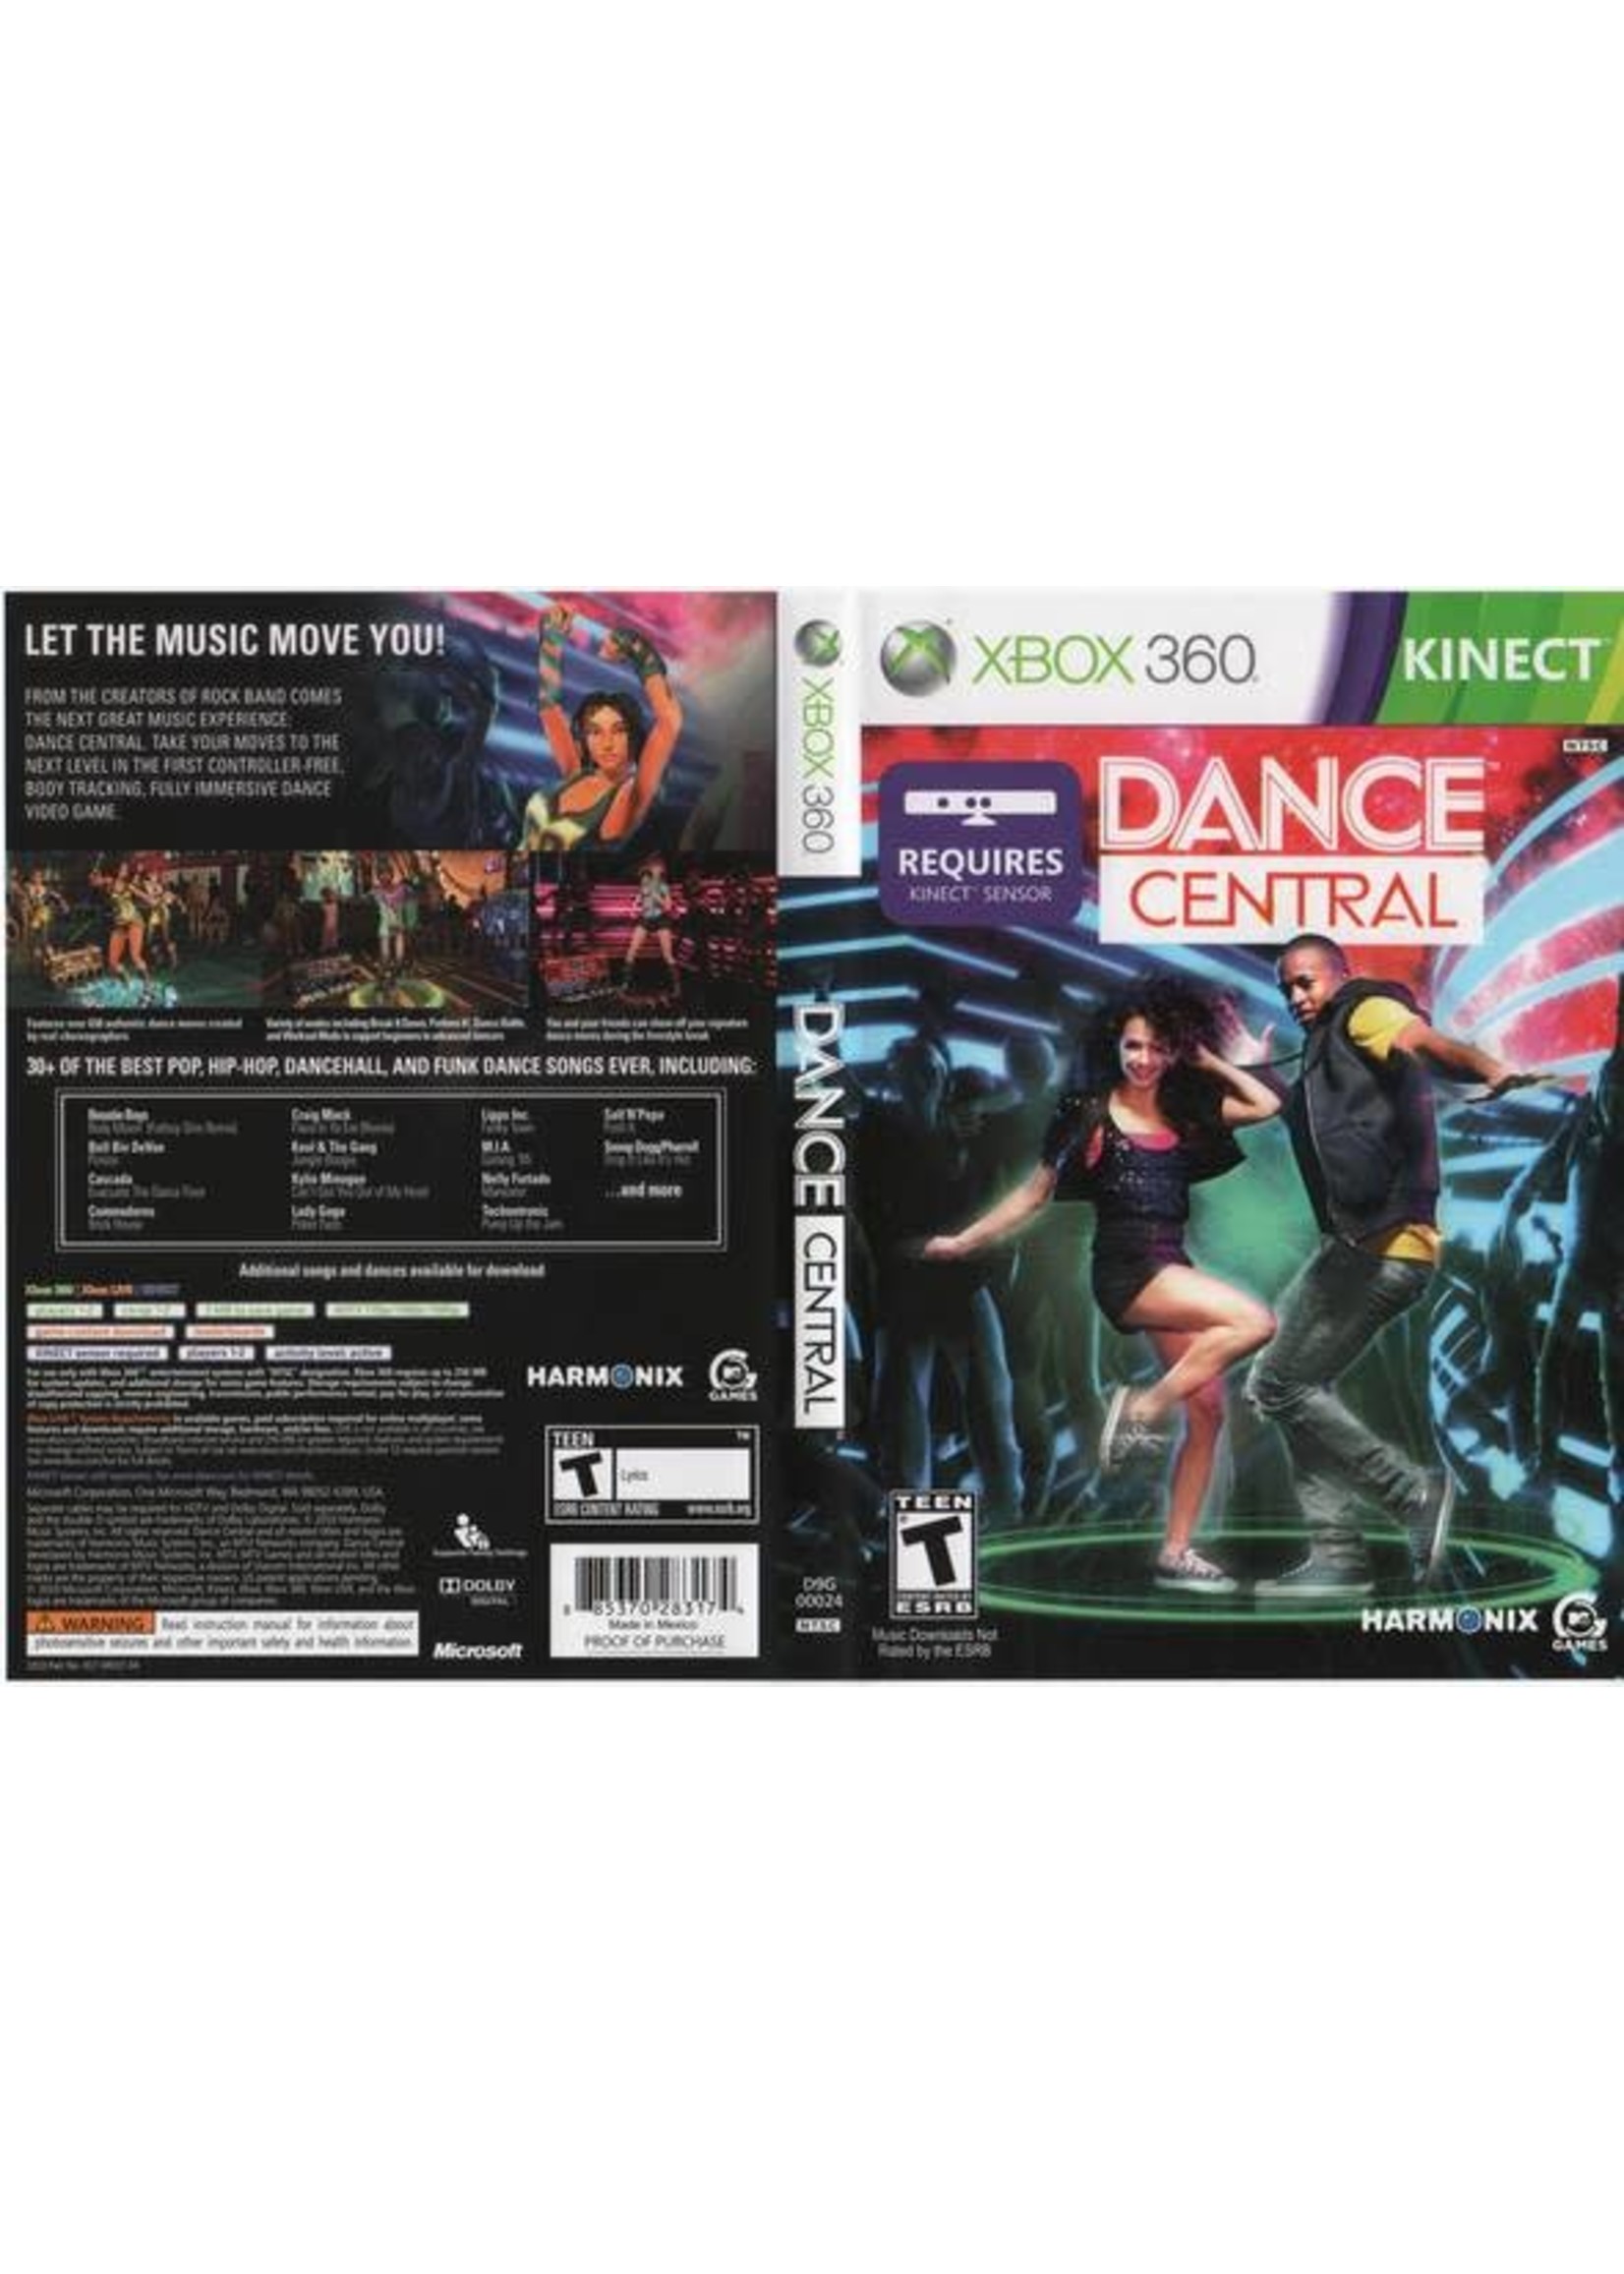 Microsoft Xbox 360 Dance Central